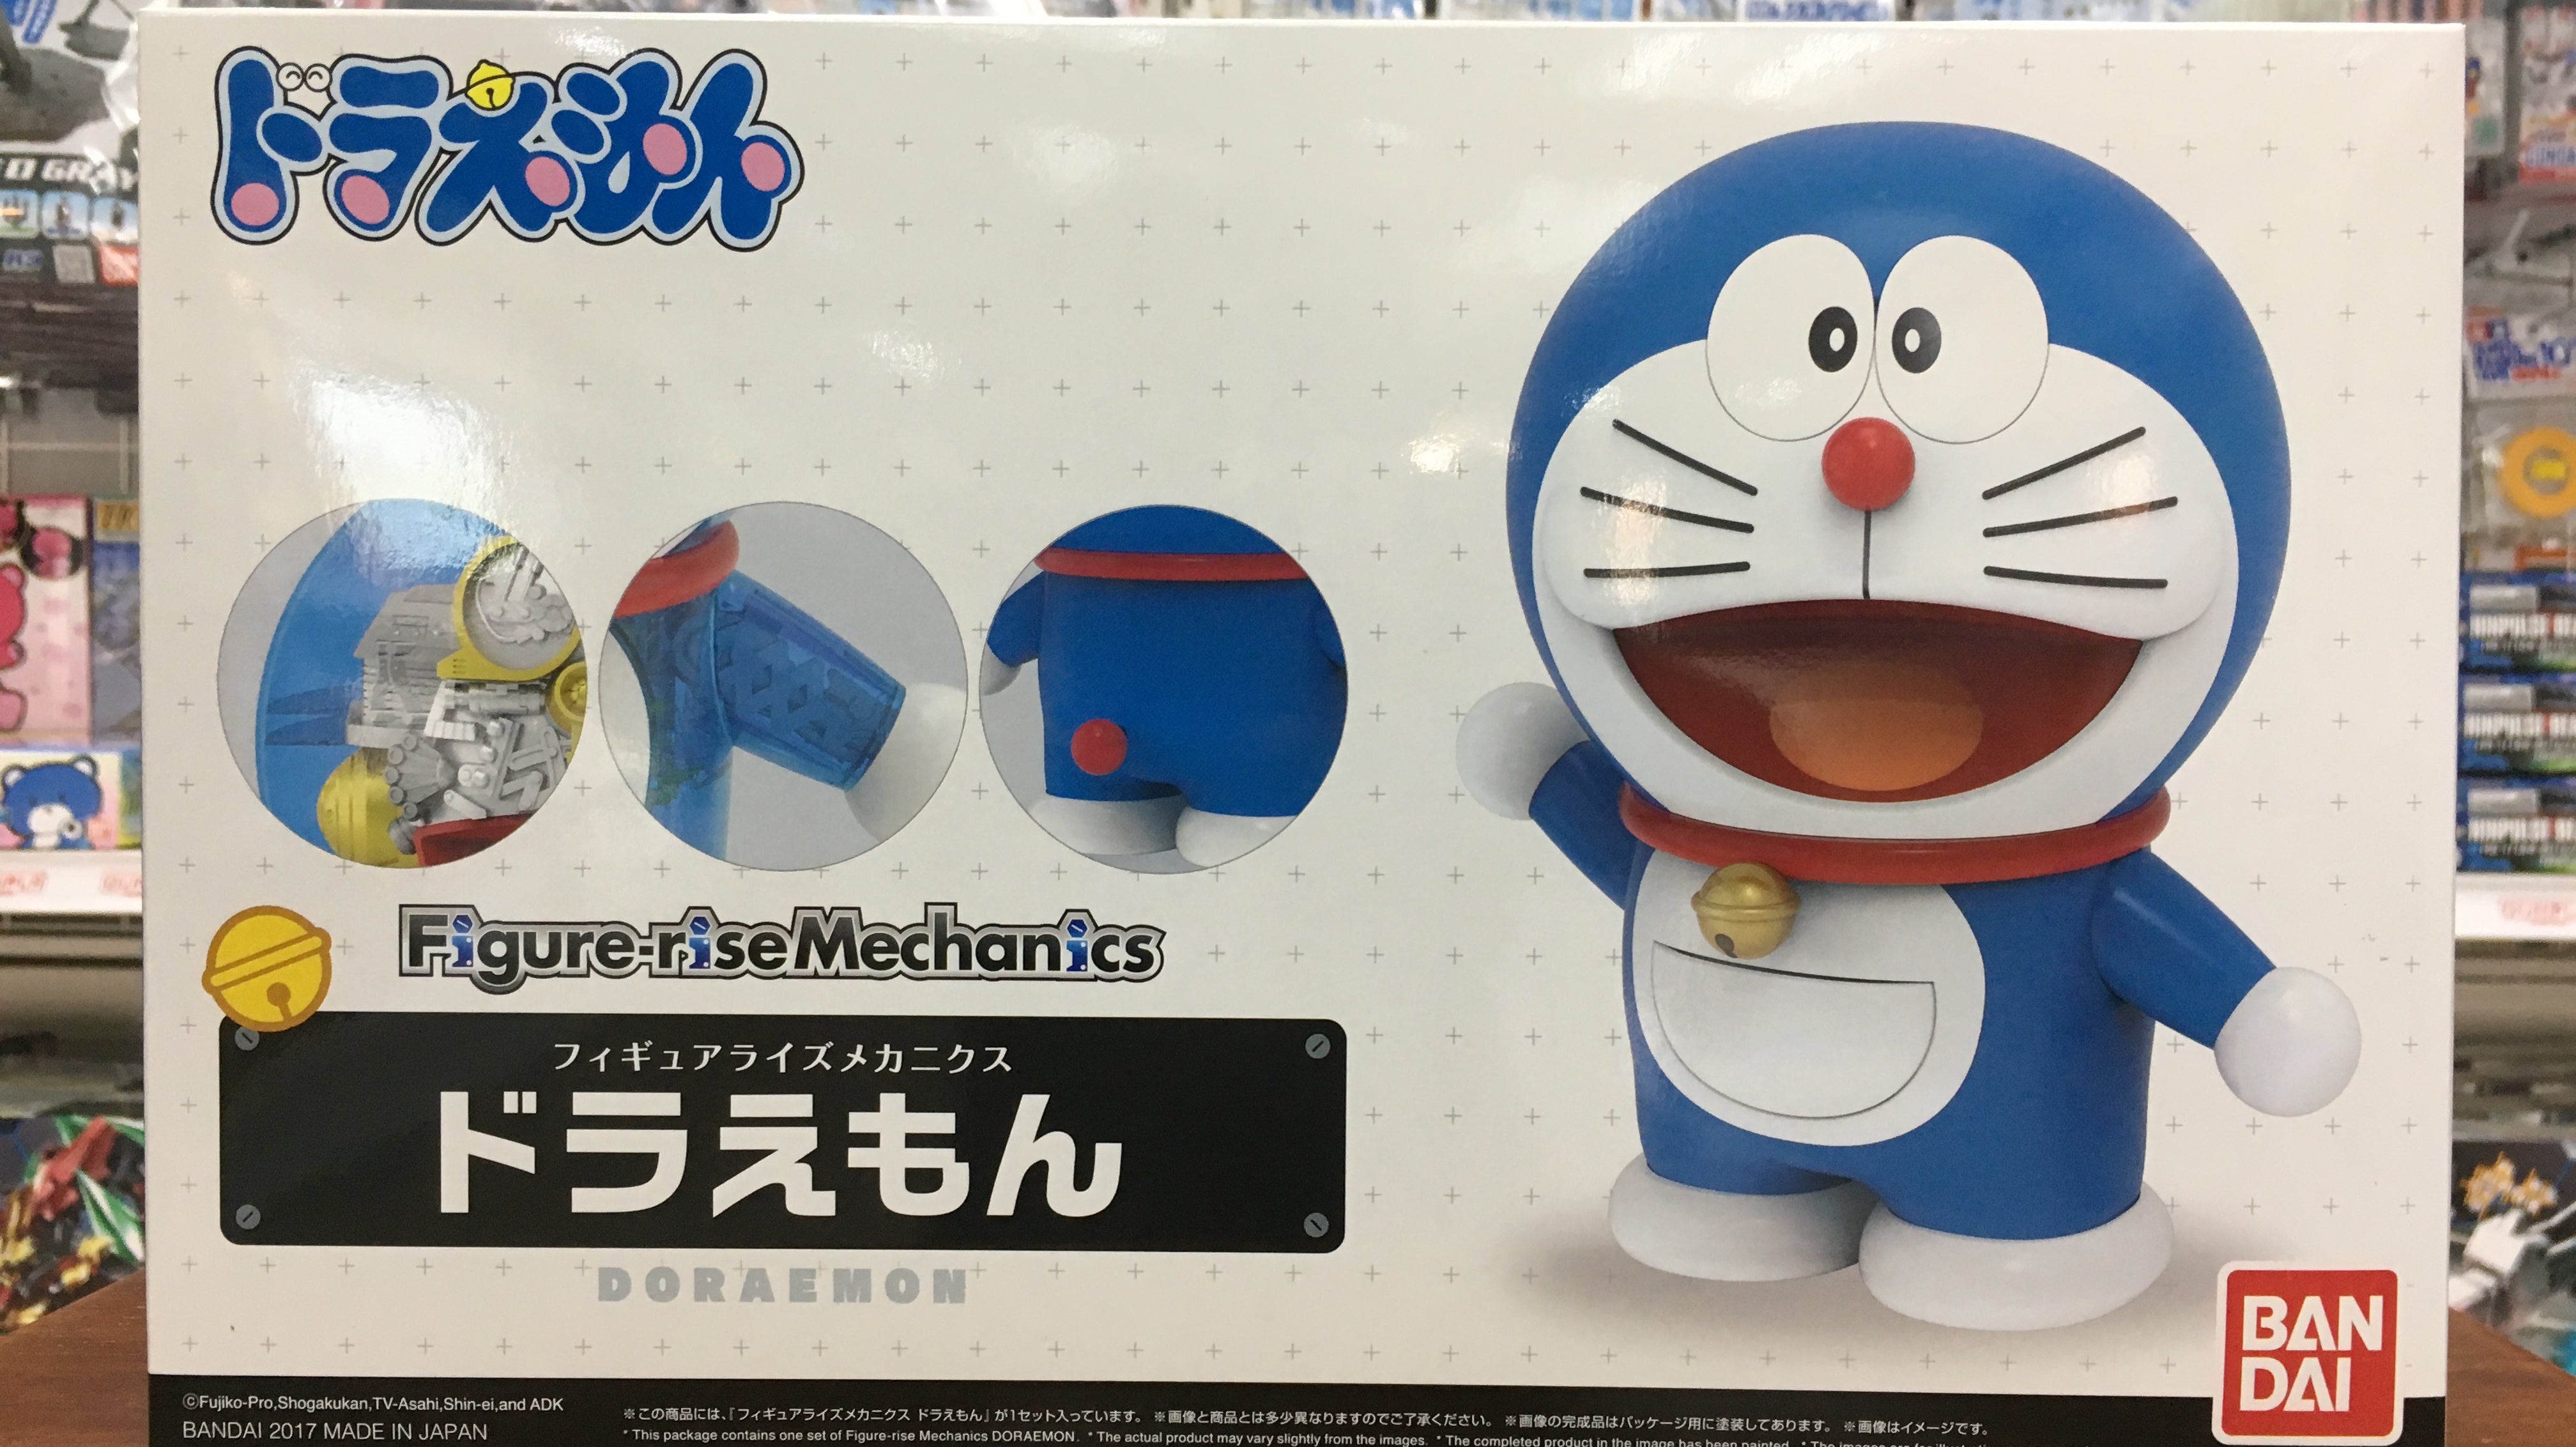 Bandai Figure-Rise Mechanics Doraemon